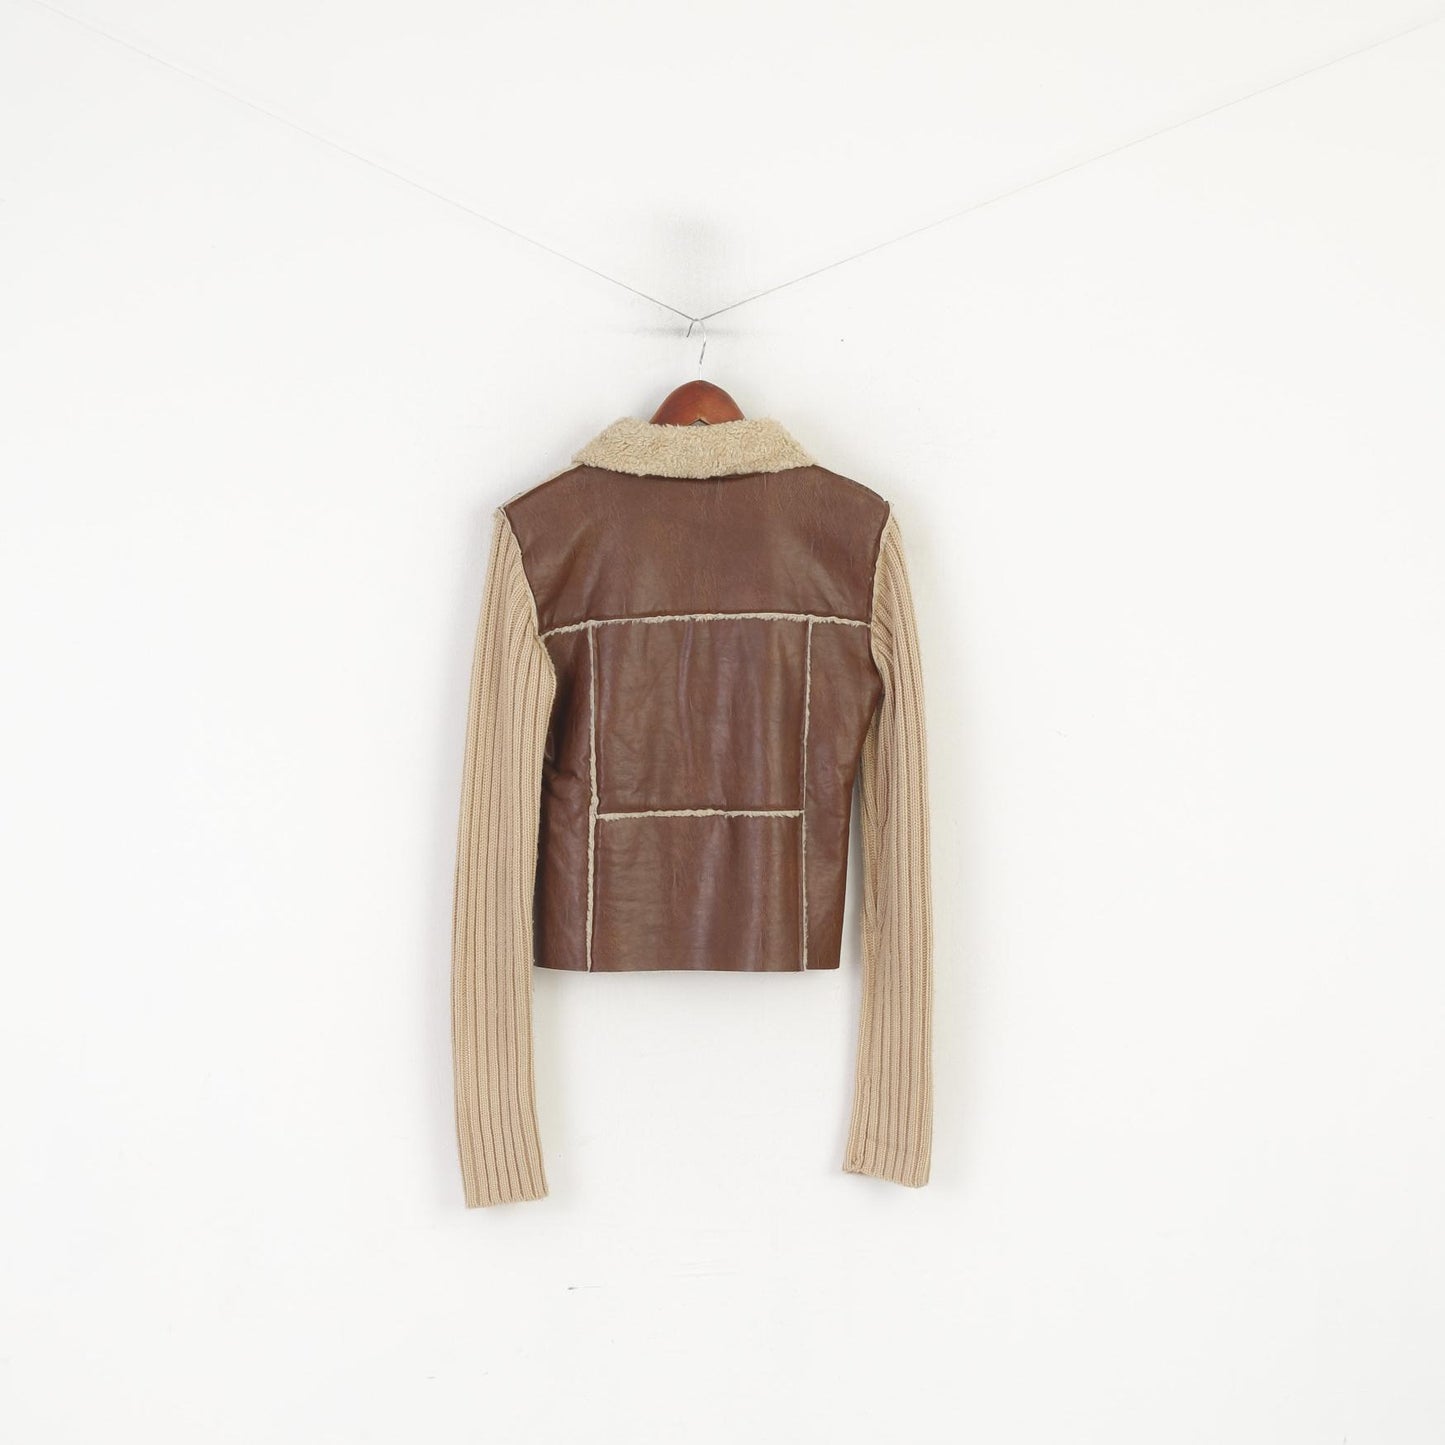 Gina Benotti Women S Jumper Brown Vintage Zip Up Faux Fur Zip Up Cardigan Sweater